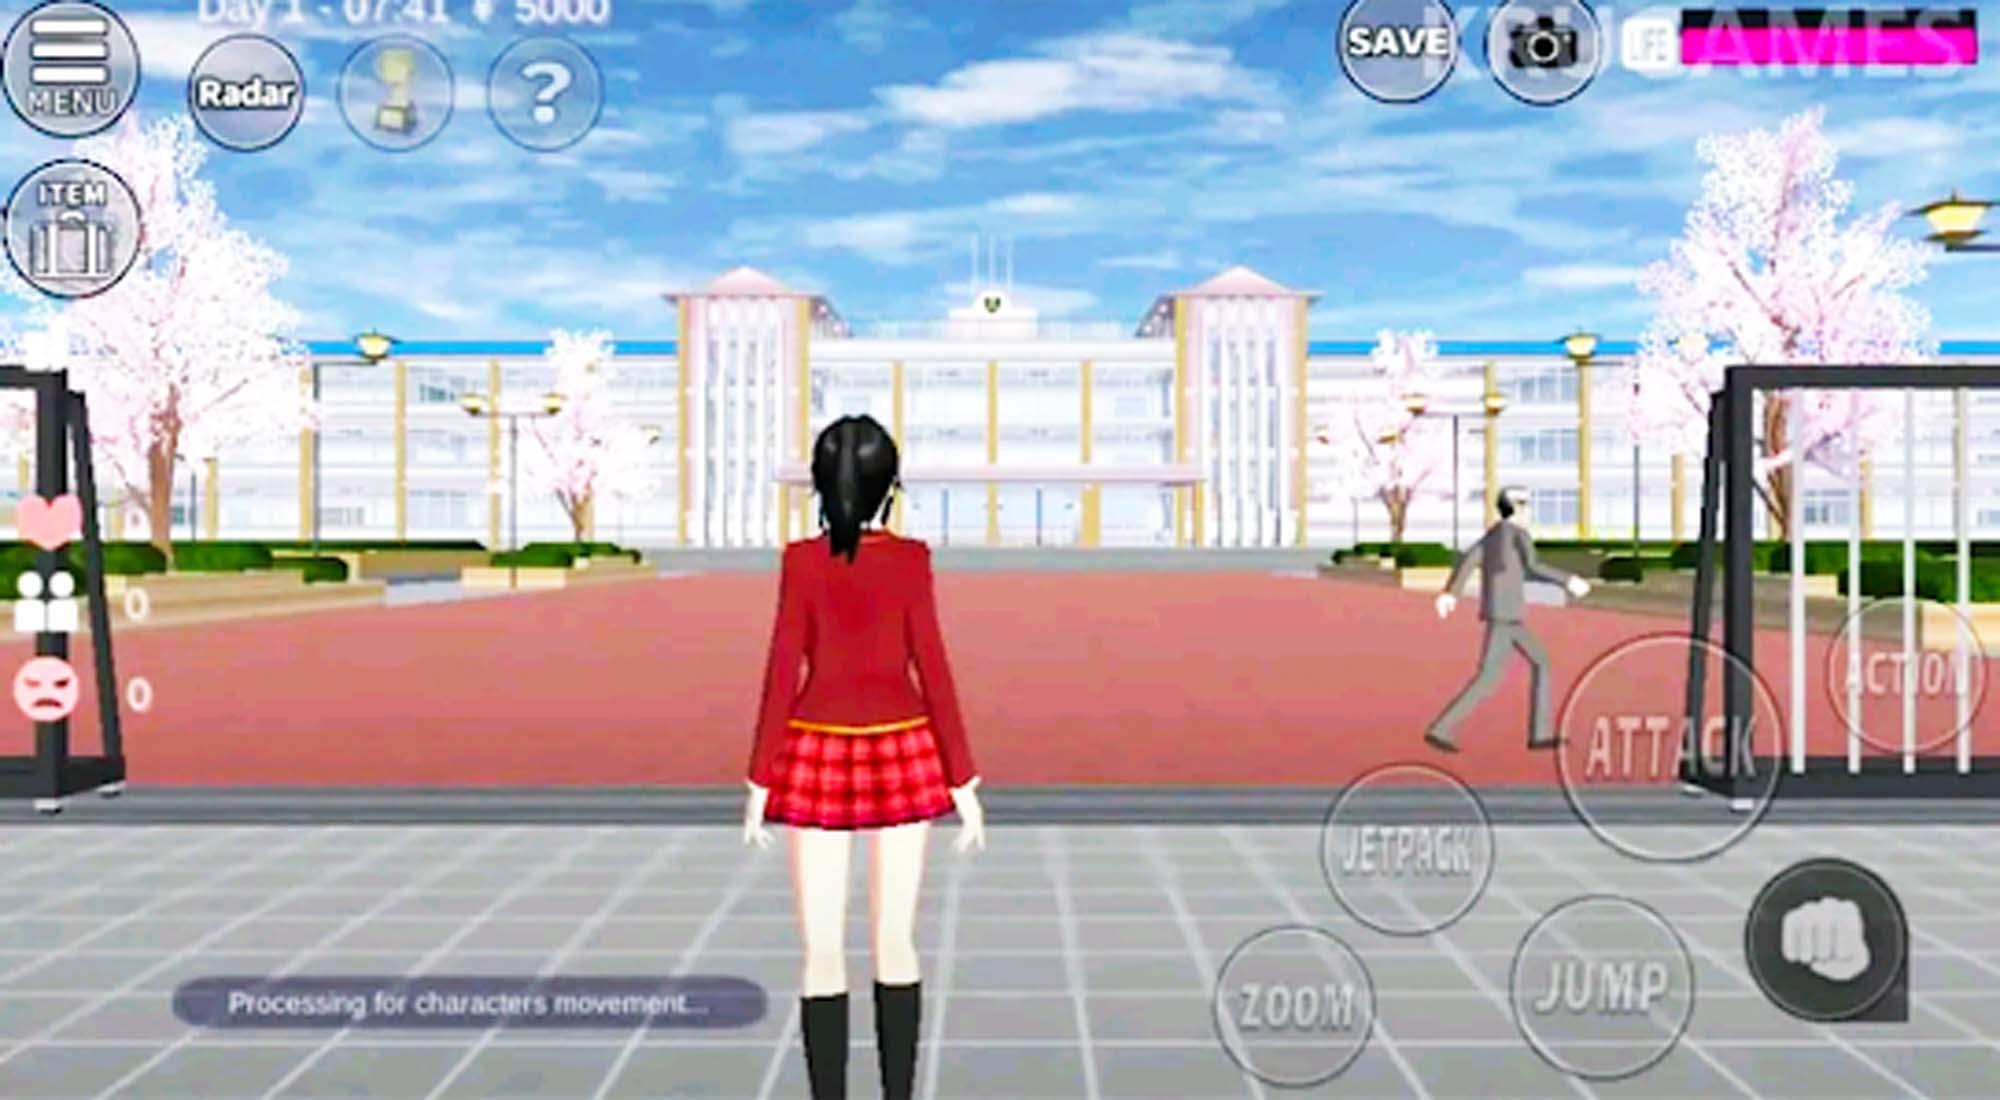 SAKURA School Simulator - Apps on Google Play